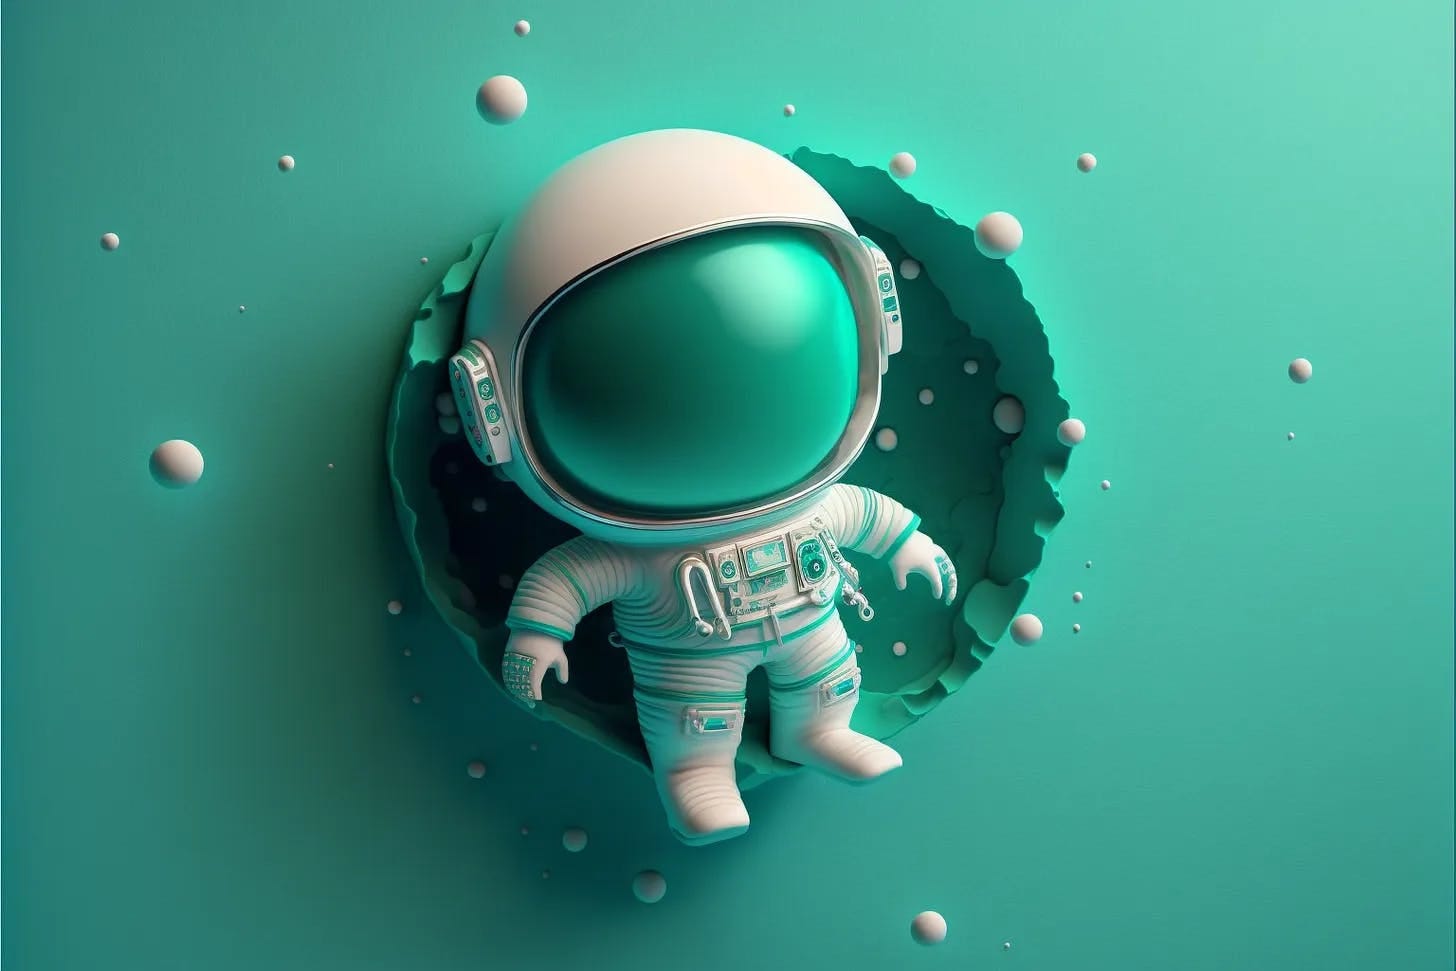 Tiny astronaut created by MidJourney